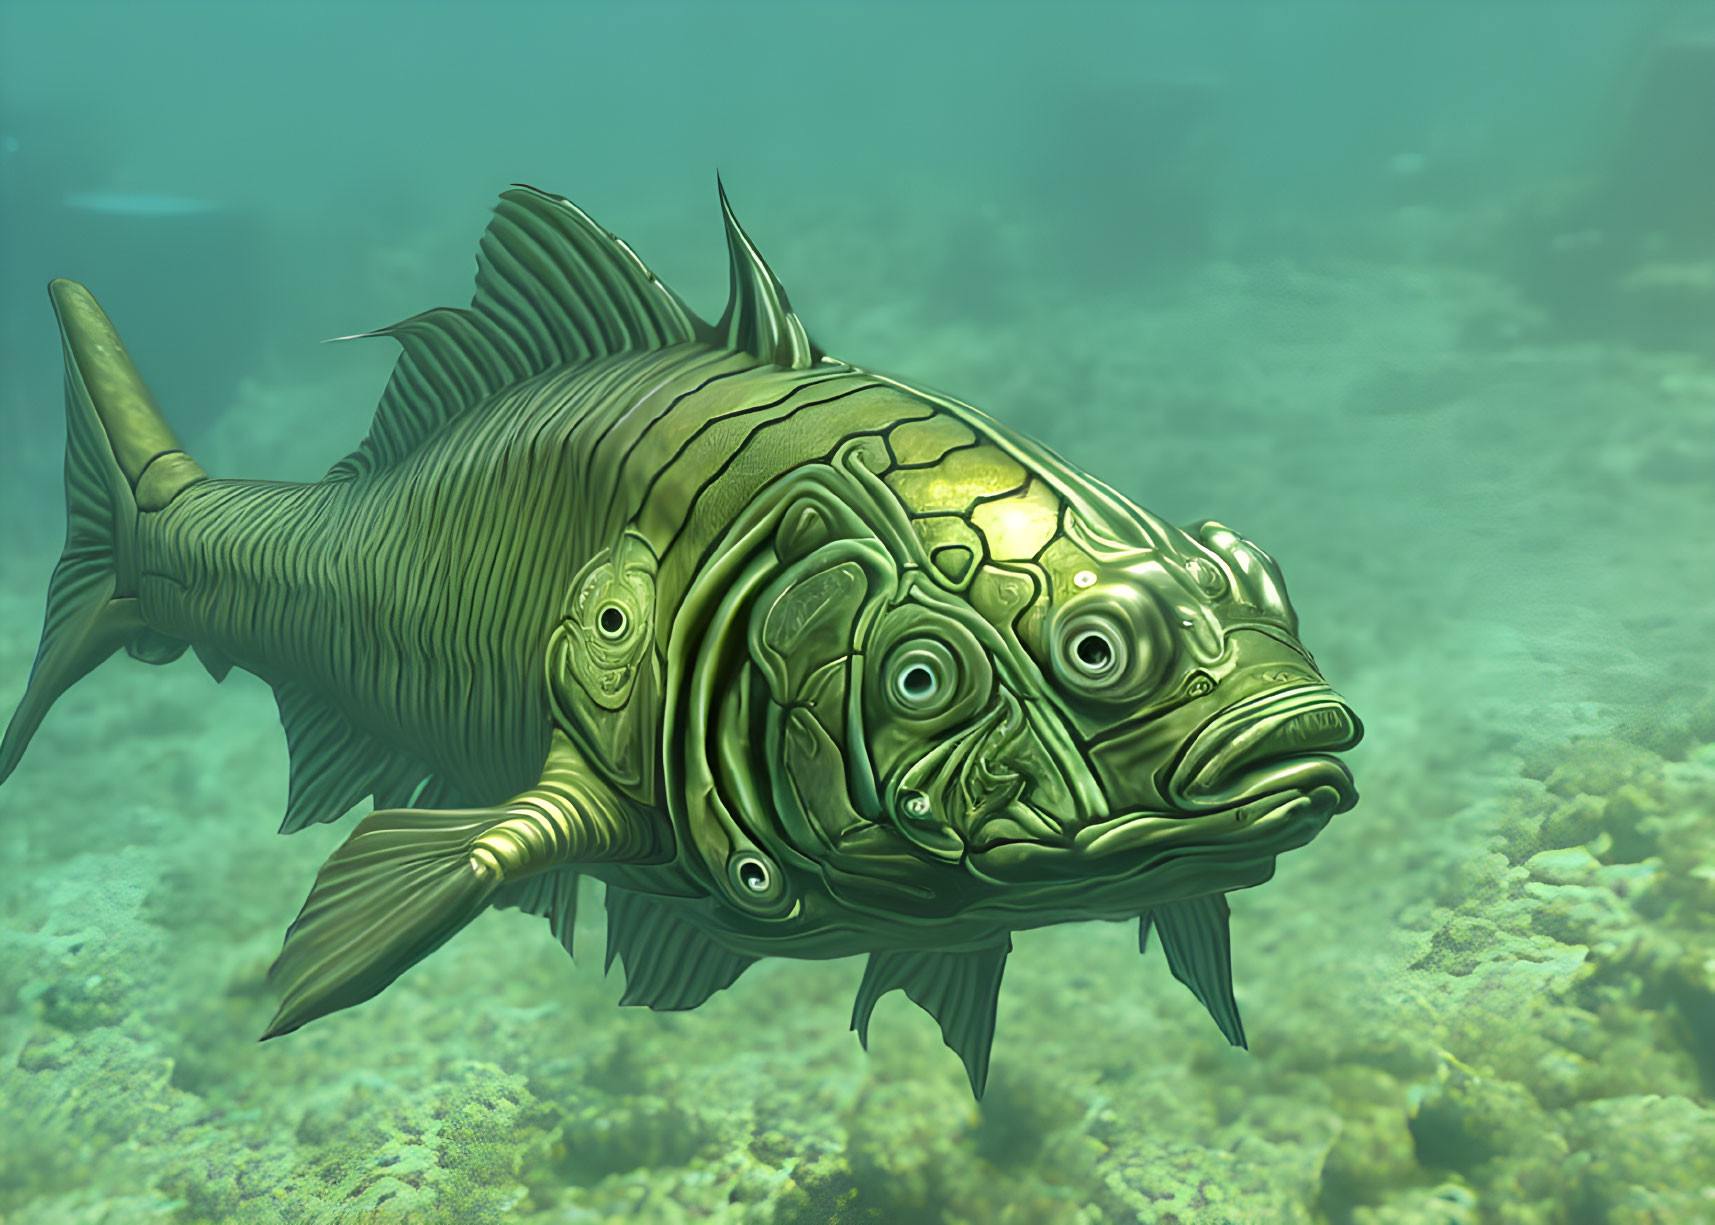 Metallic Fish with Intricate Patterns Swimming Near Ocean Floor